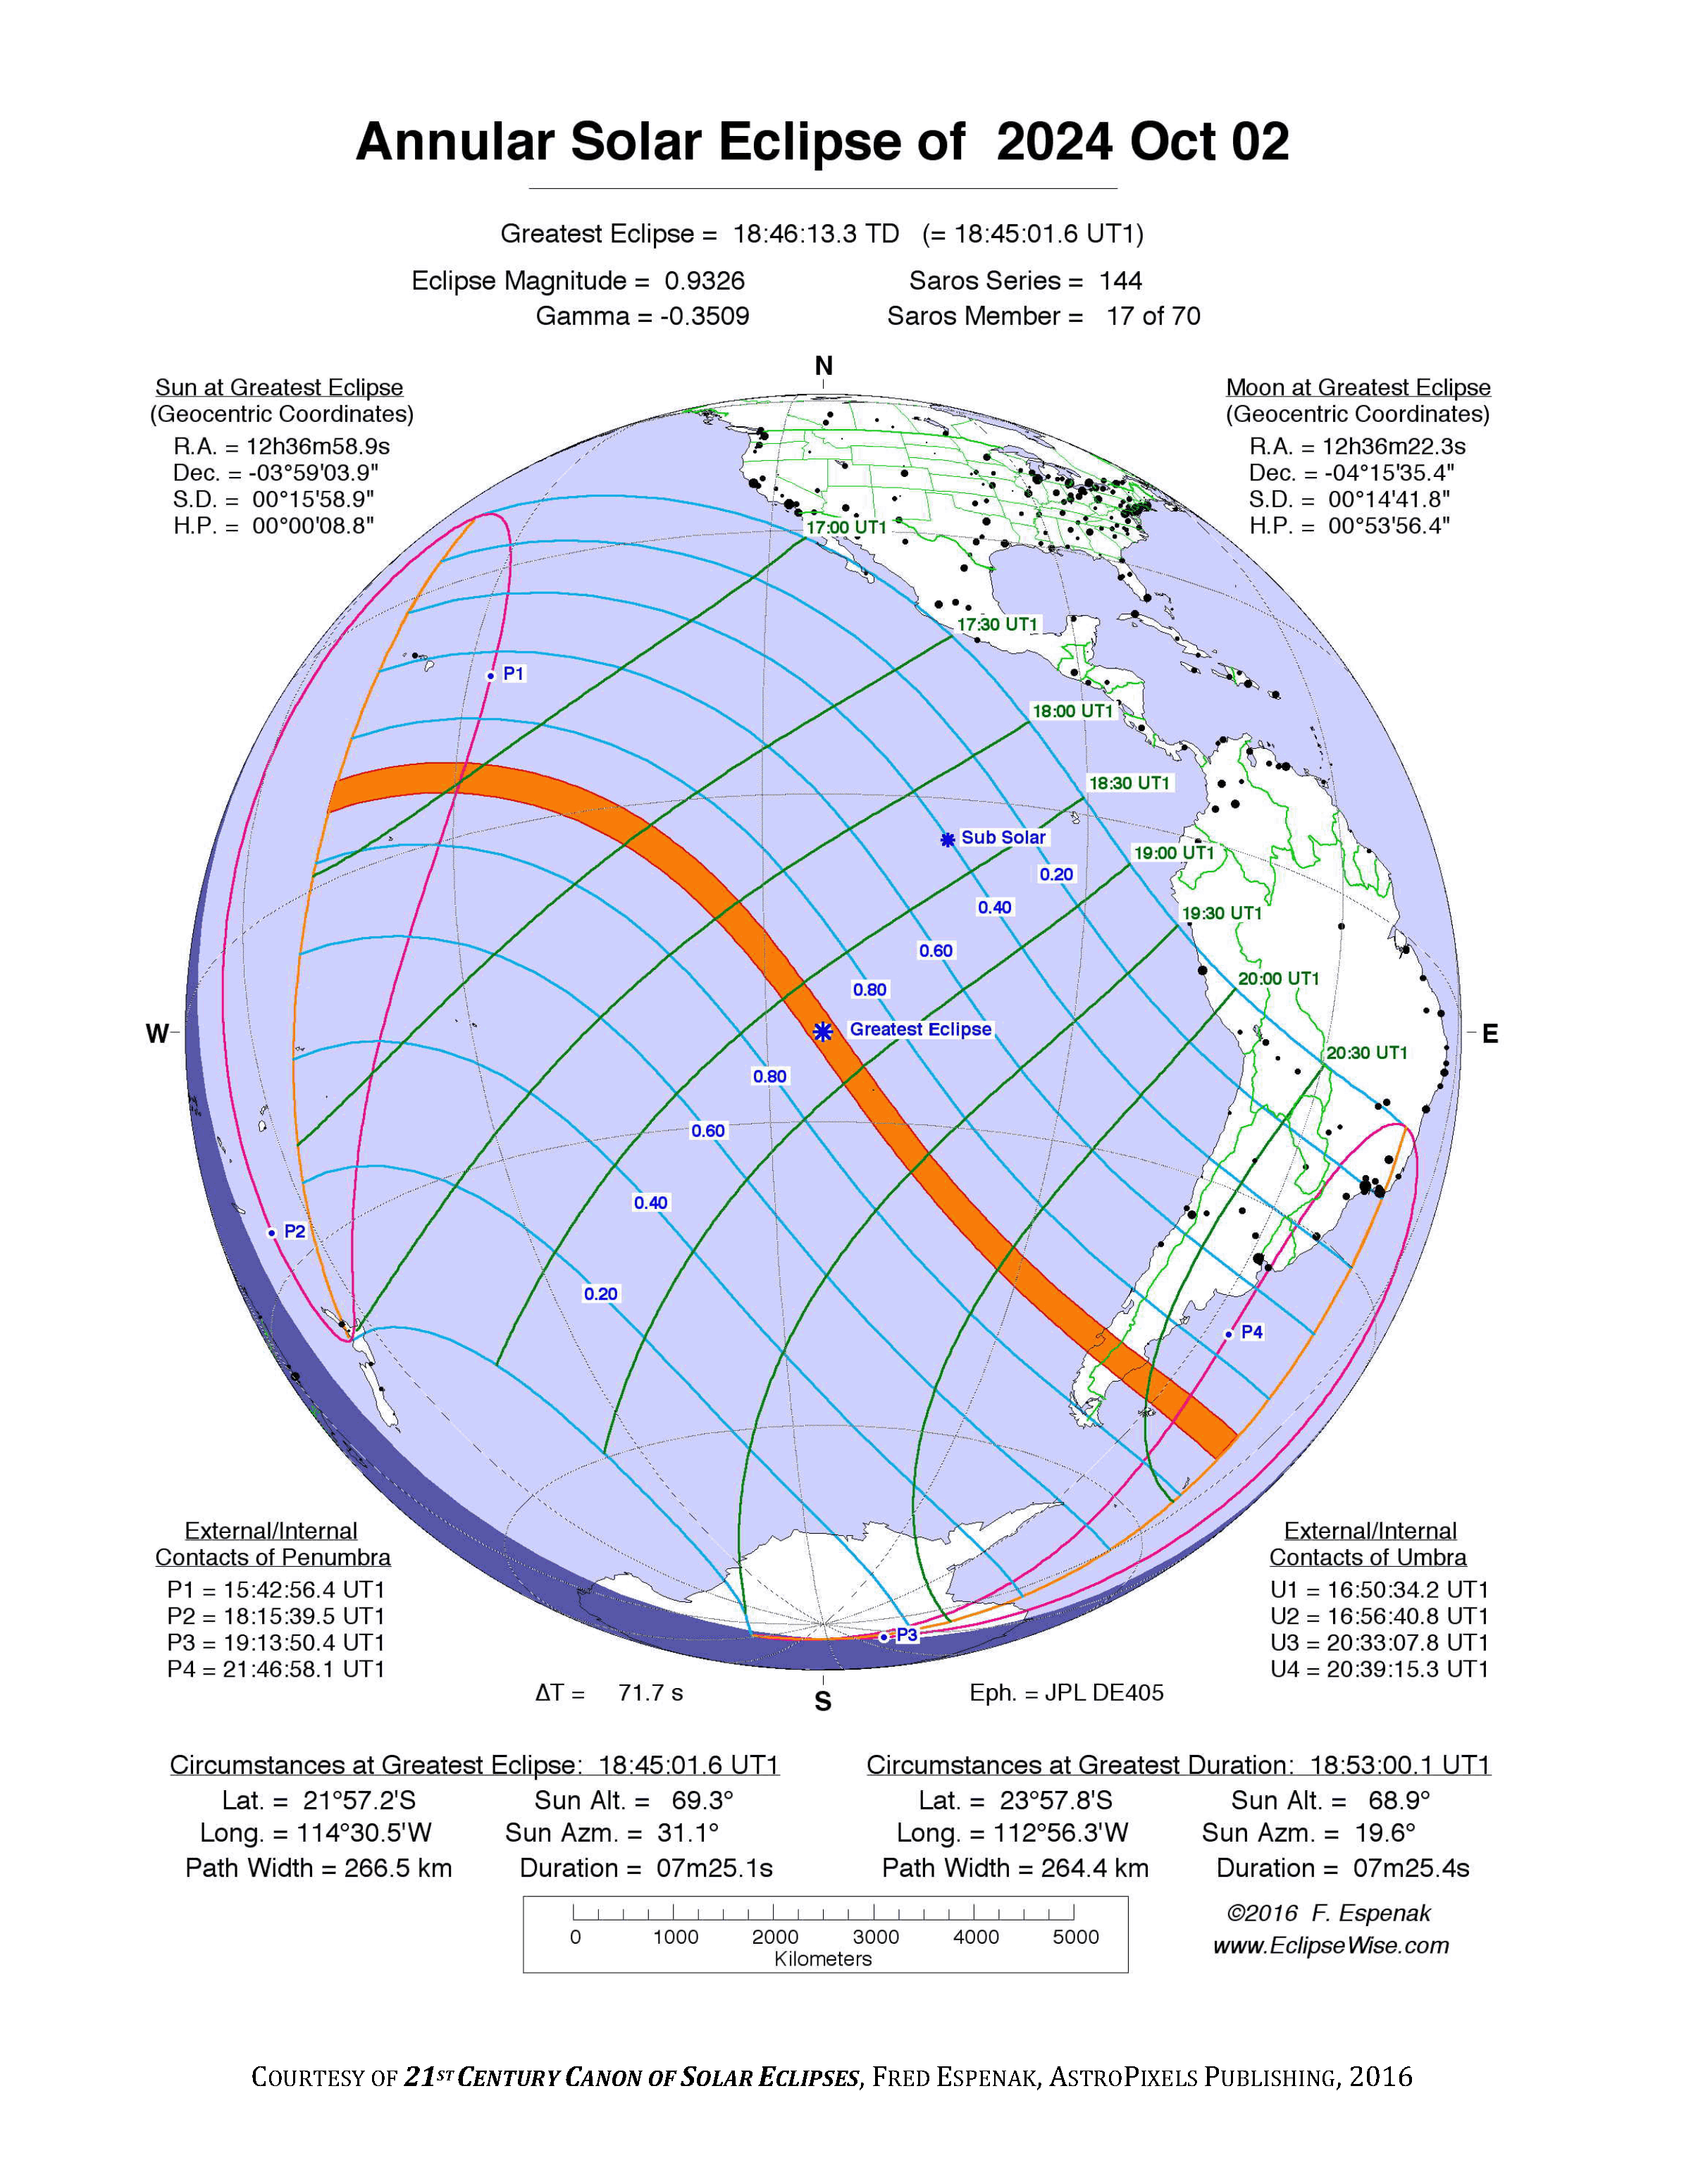 EclipseWise Annular Solar Eclipse of 2024 Oct 02